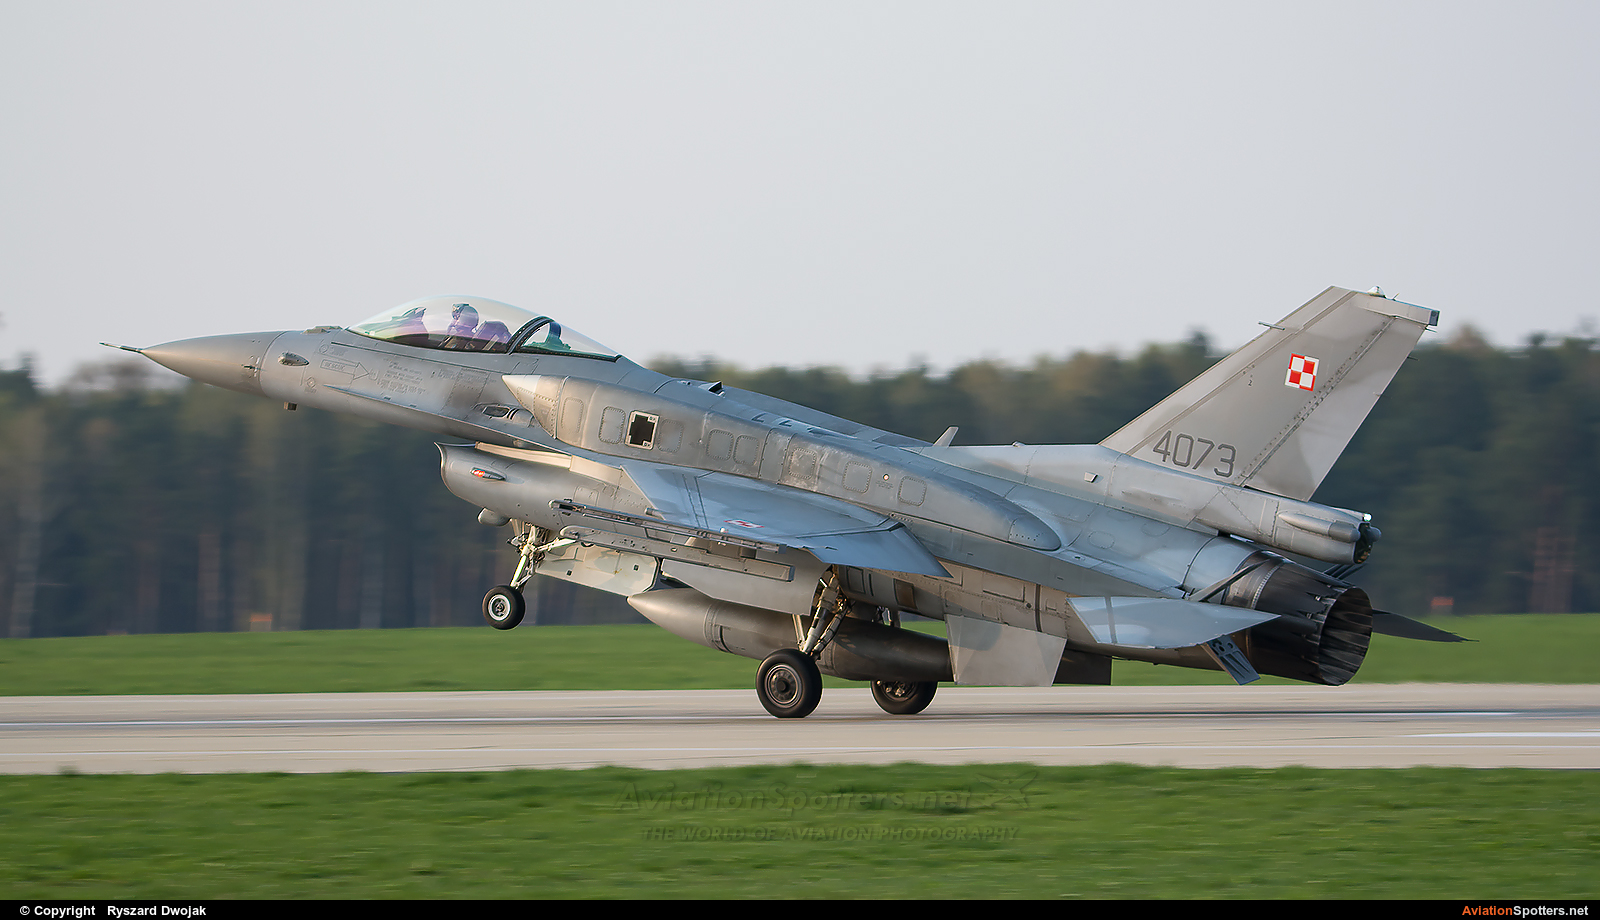 Poland - Air Force  -  F-16C Block 52+ Fighting Falcon  (4073) By Ryszard Dwojak (ryś)